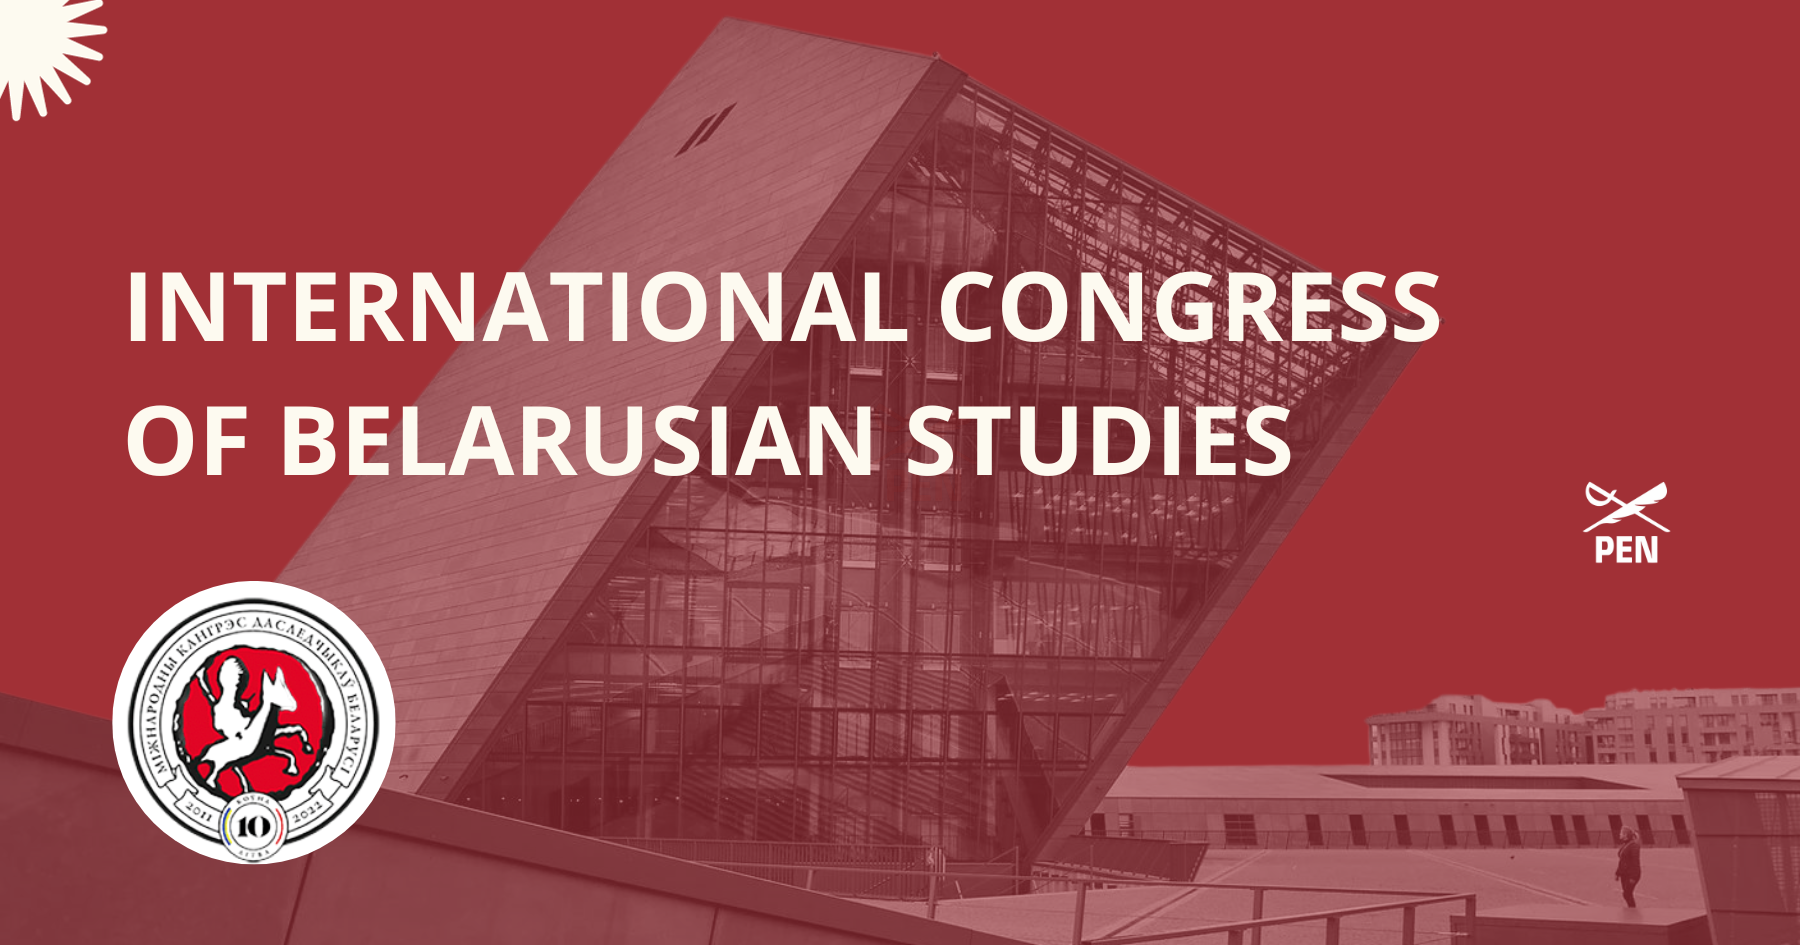 PEN Belarus presents its latest research at the International Congress of Belarusian Studies